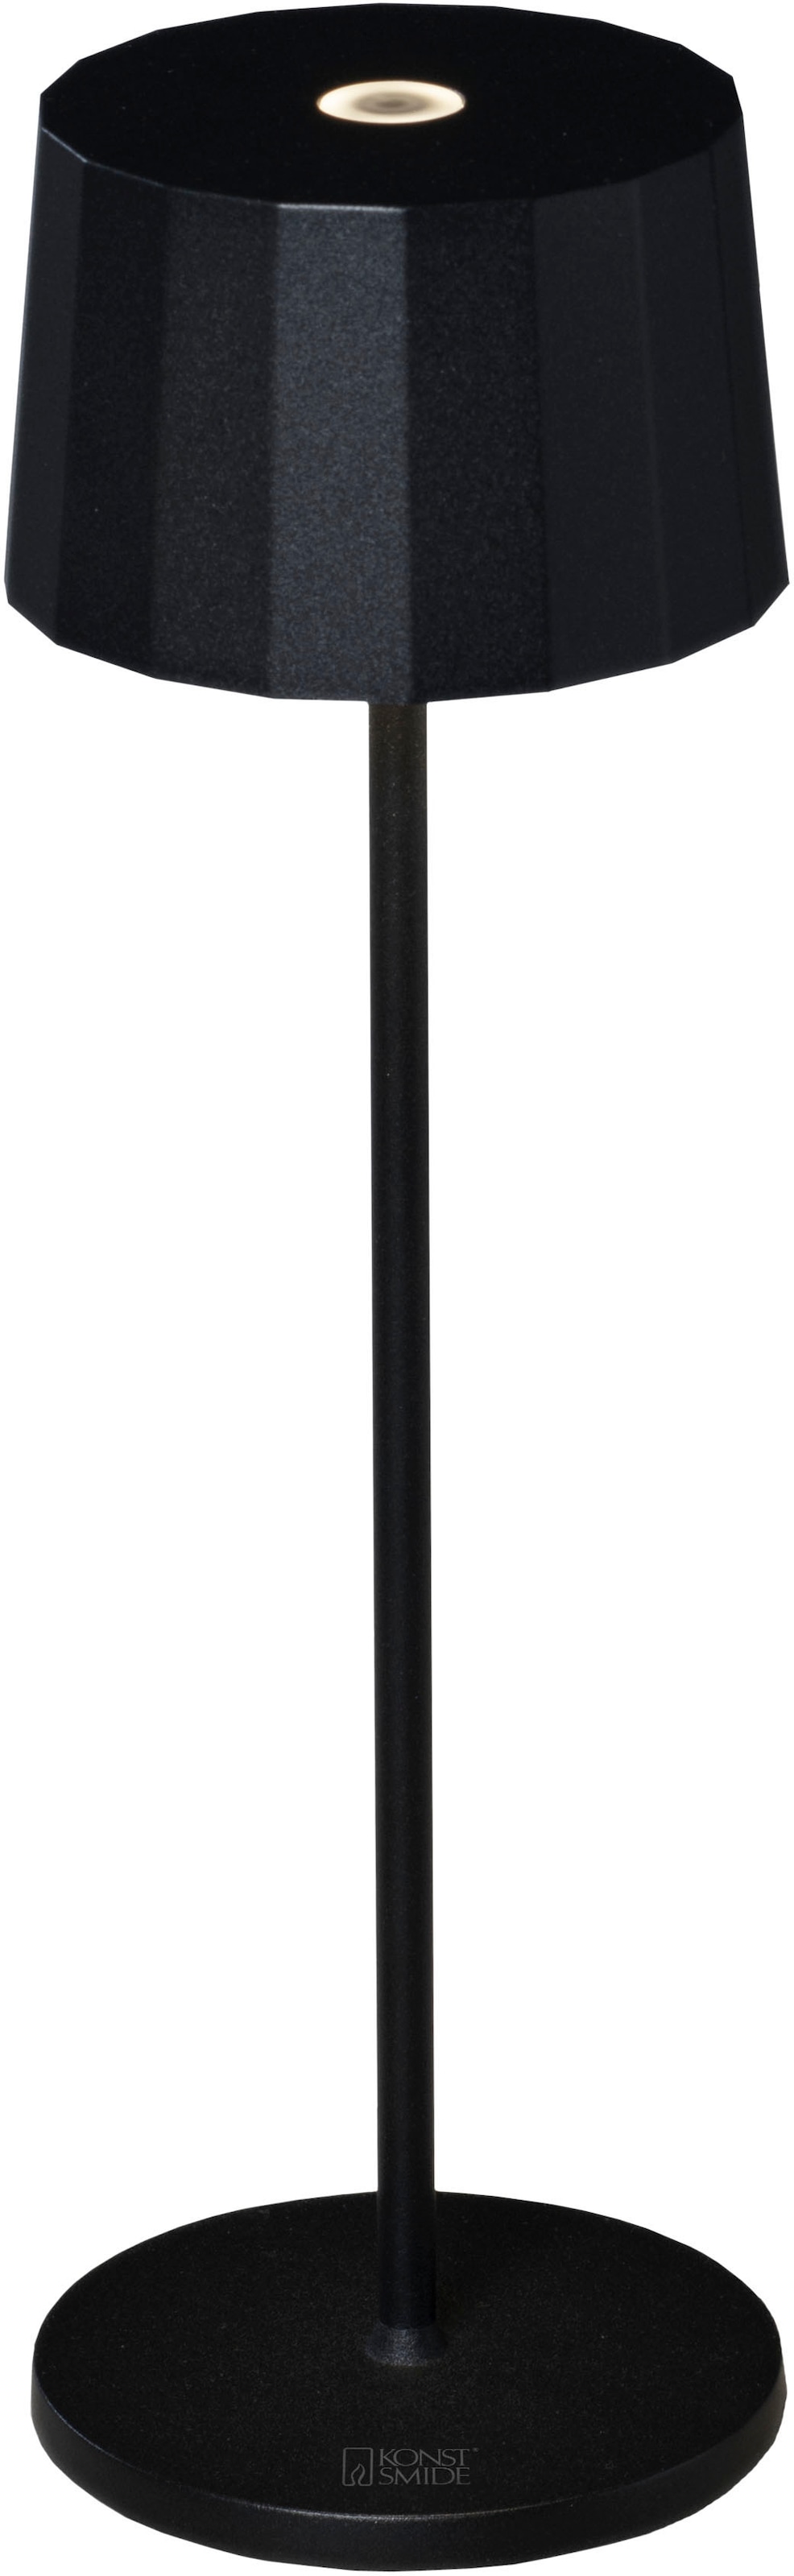 KONSTSMIDE LED Tischleuchte schwarz, Positano | dimm USB-Tischleuchte LED BAUR »Positano«, Farbtemperatur